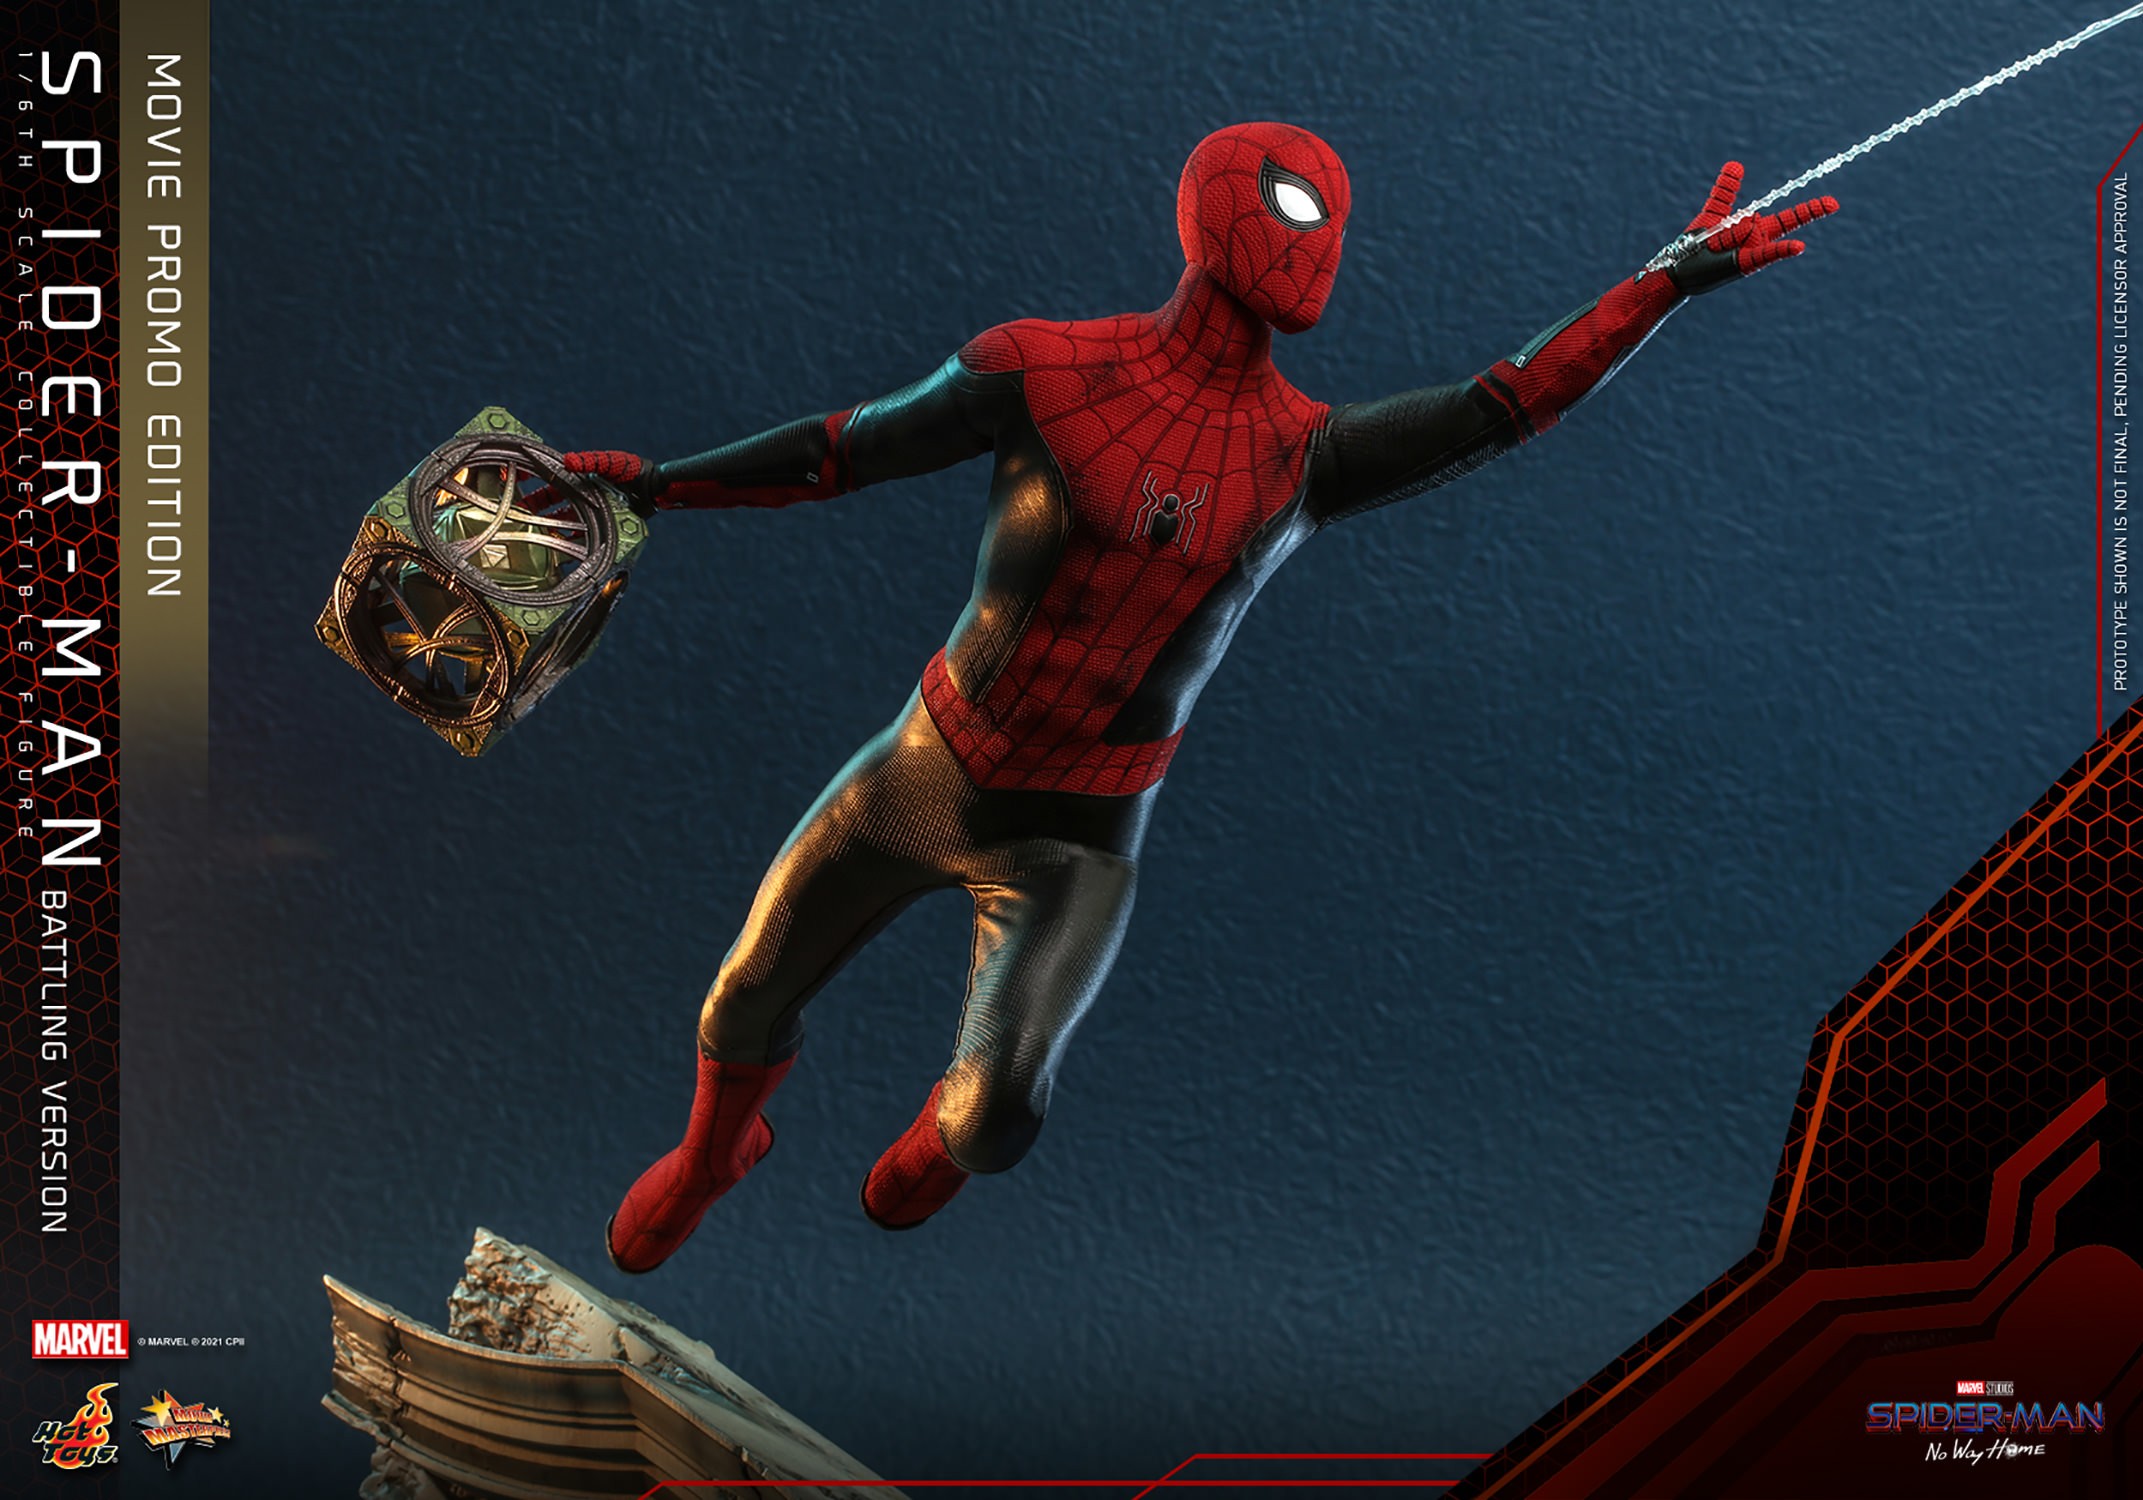 Spider-Man (Battling Version) Movie Promo Edition- Prototype Shown